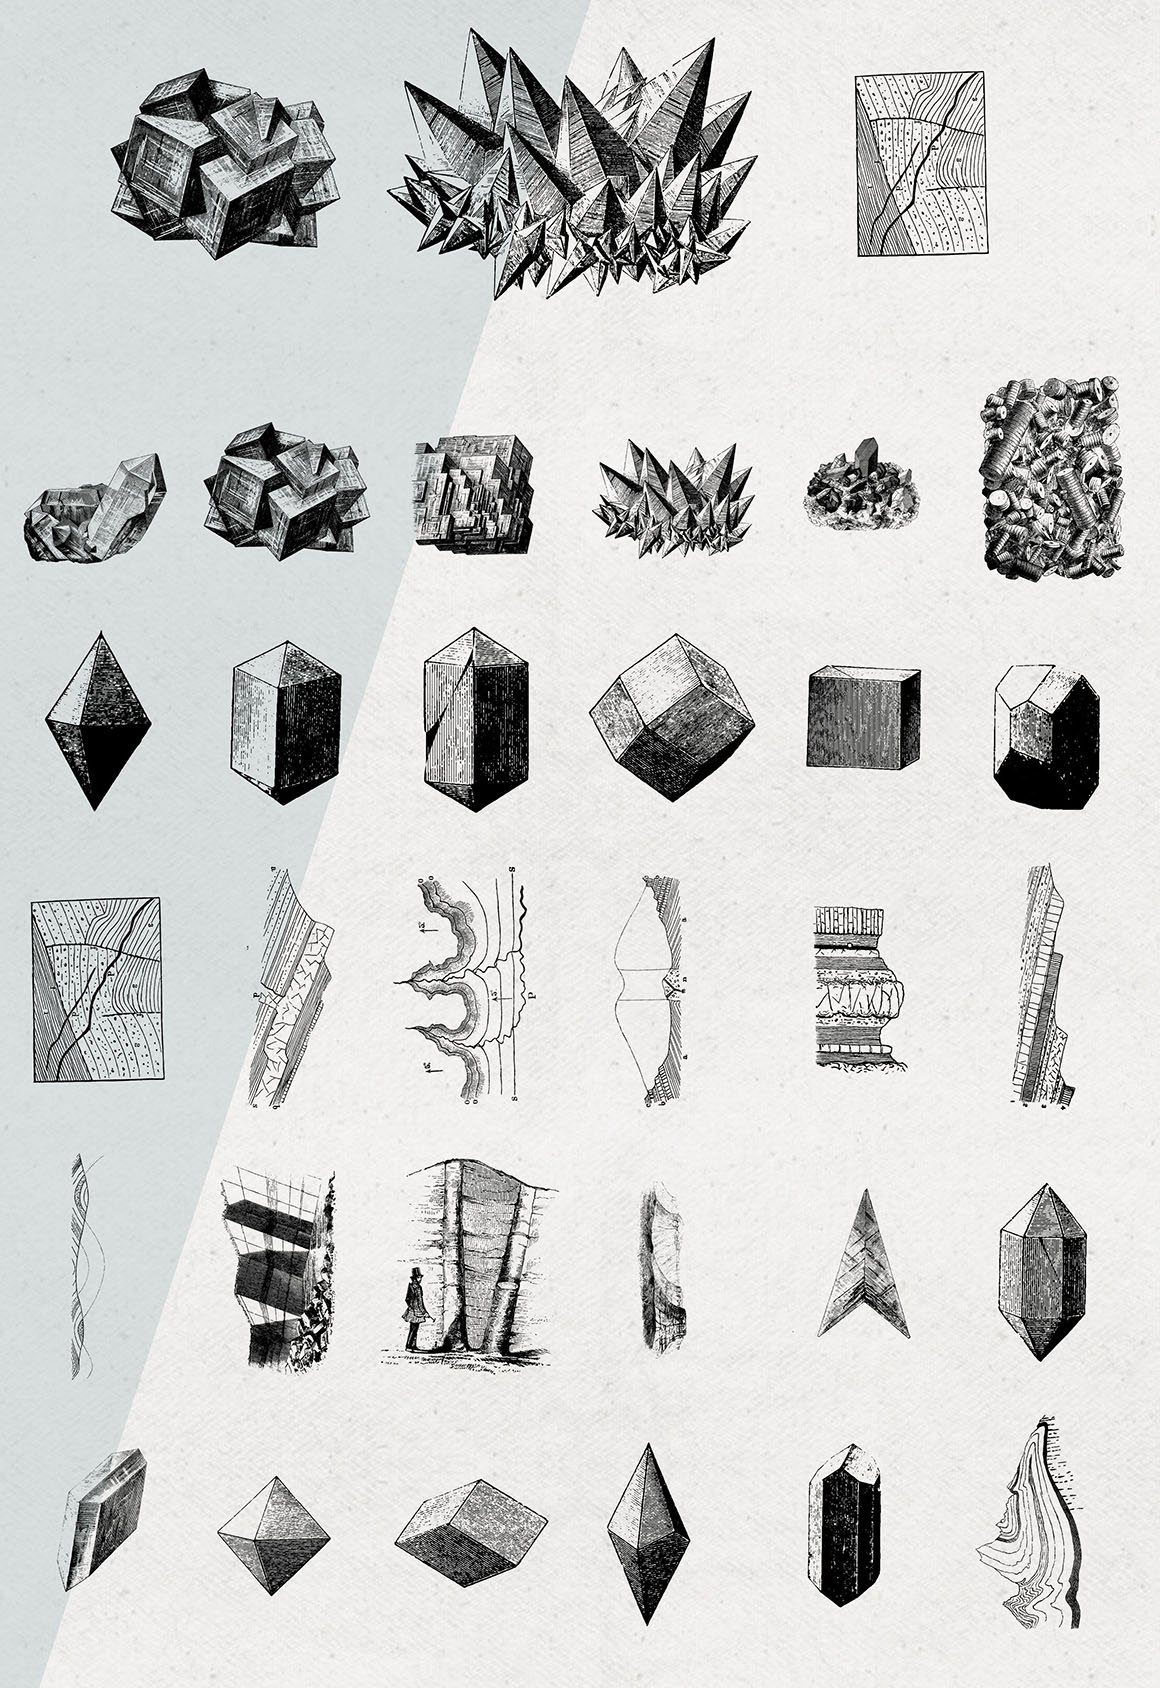 Gems & Stones Geology Illustrations